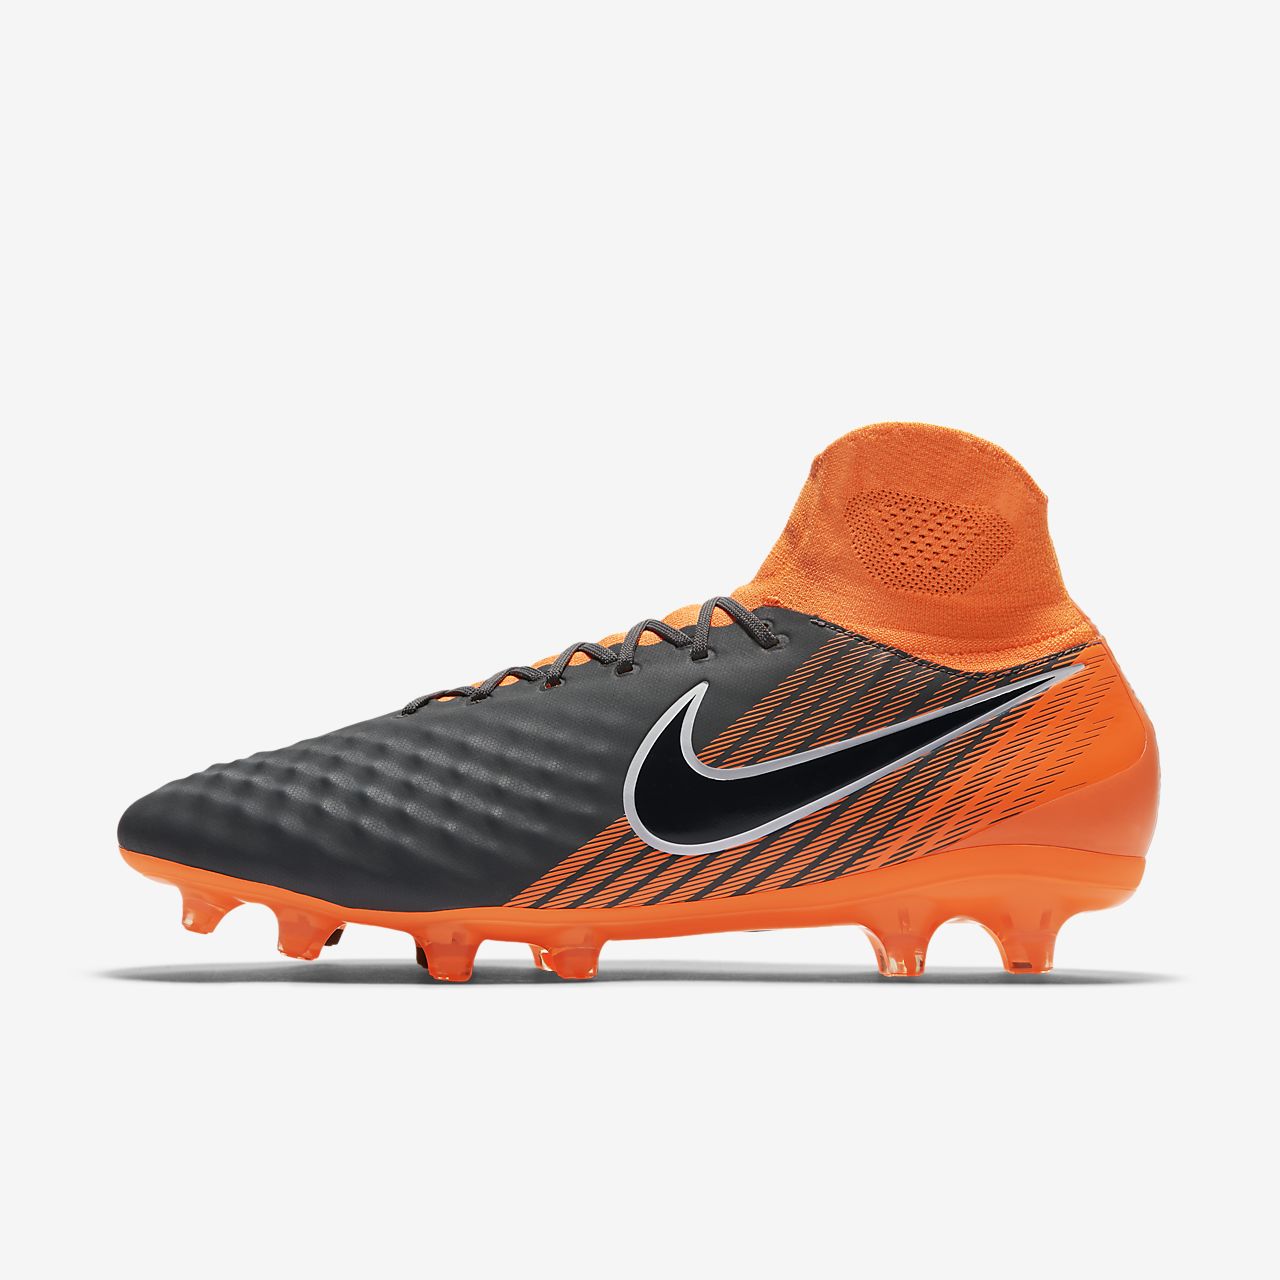 Customize Nike Magista Obra II FG Sock Football Boots Black